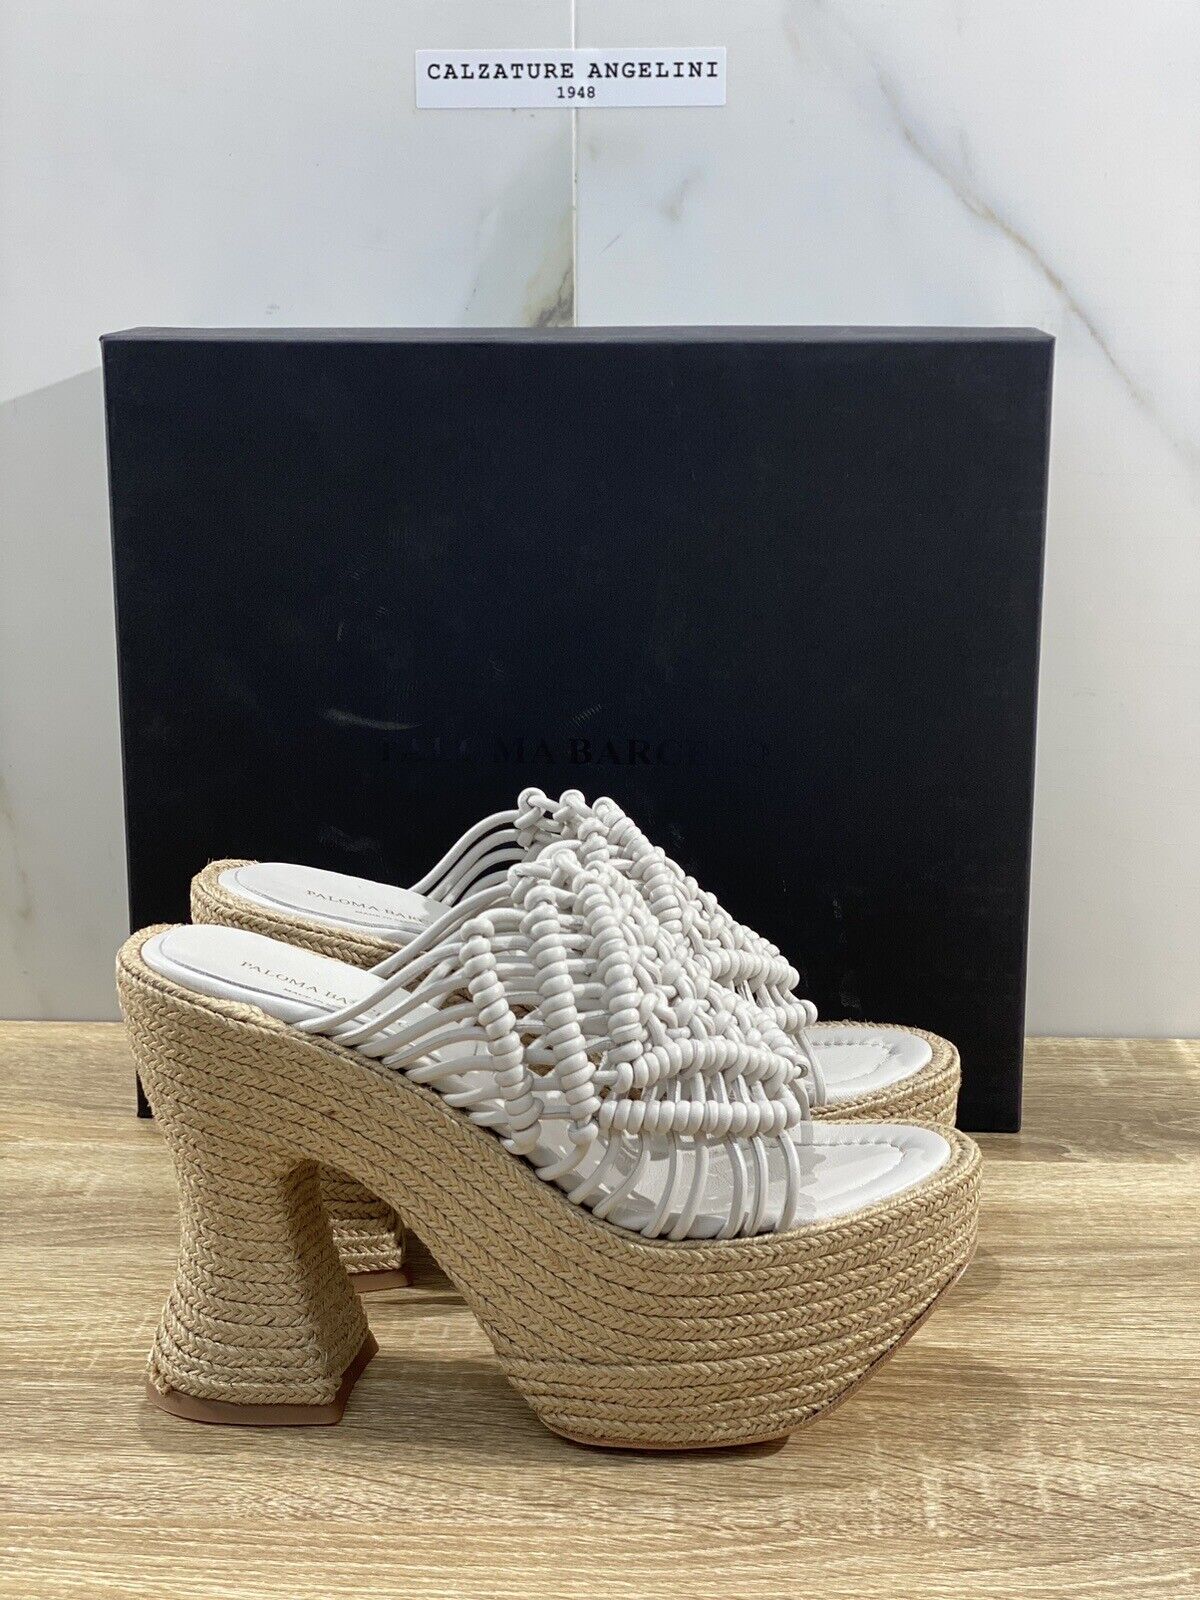 Paloma BARCELO’ Sandalo Donna Salma Pelle White Luxury Shoes 40